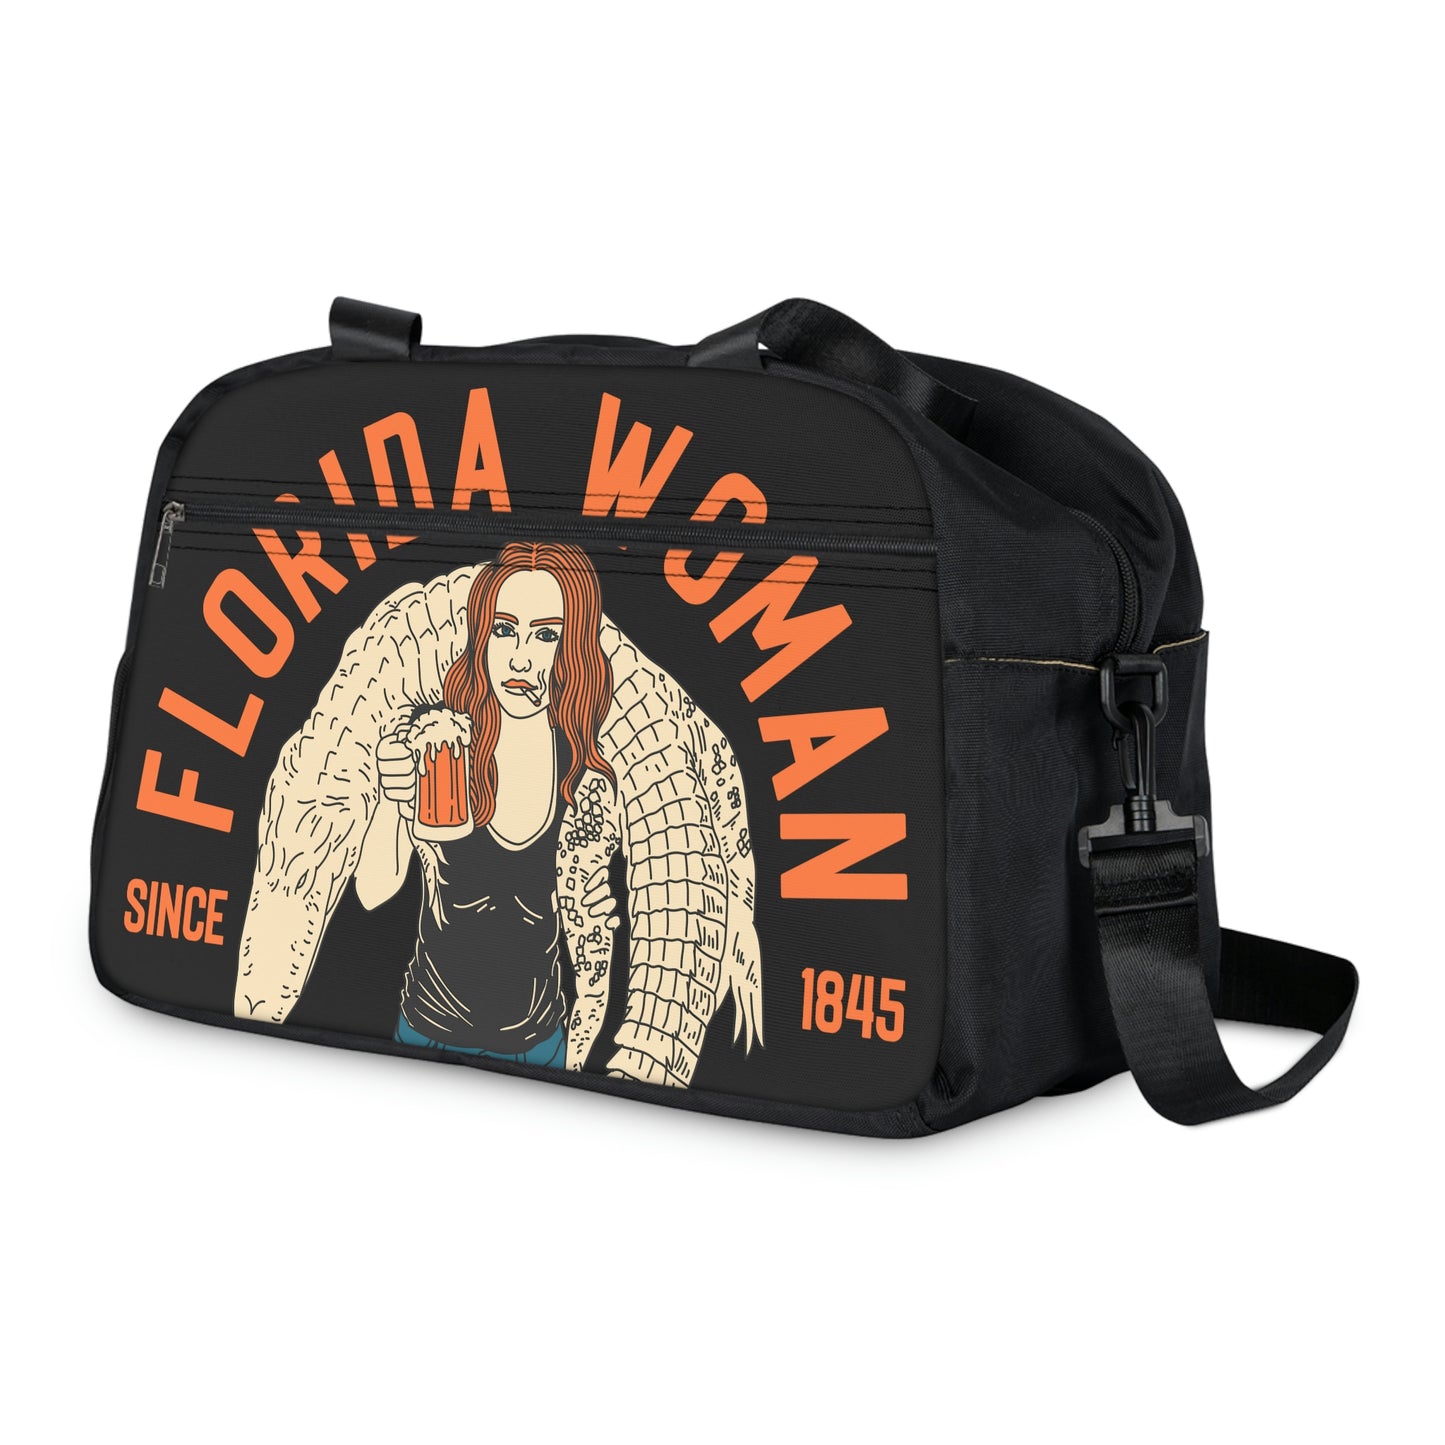 Florida Woman - Alligator - Fitness Bag